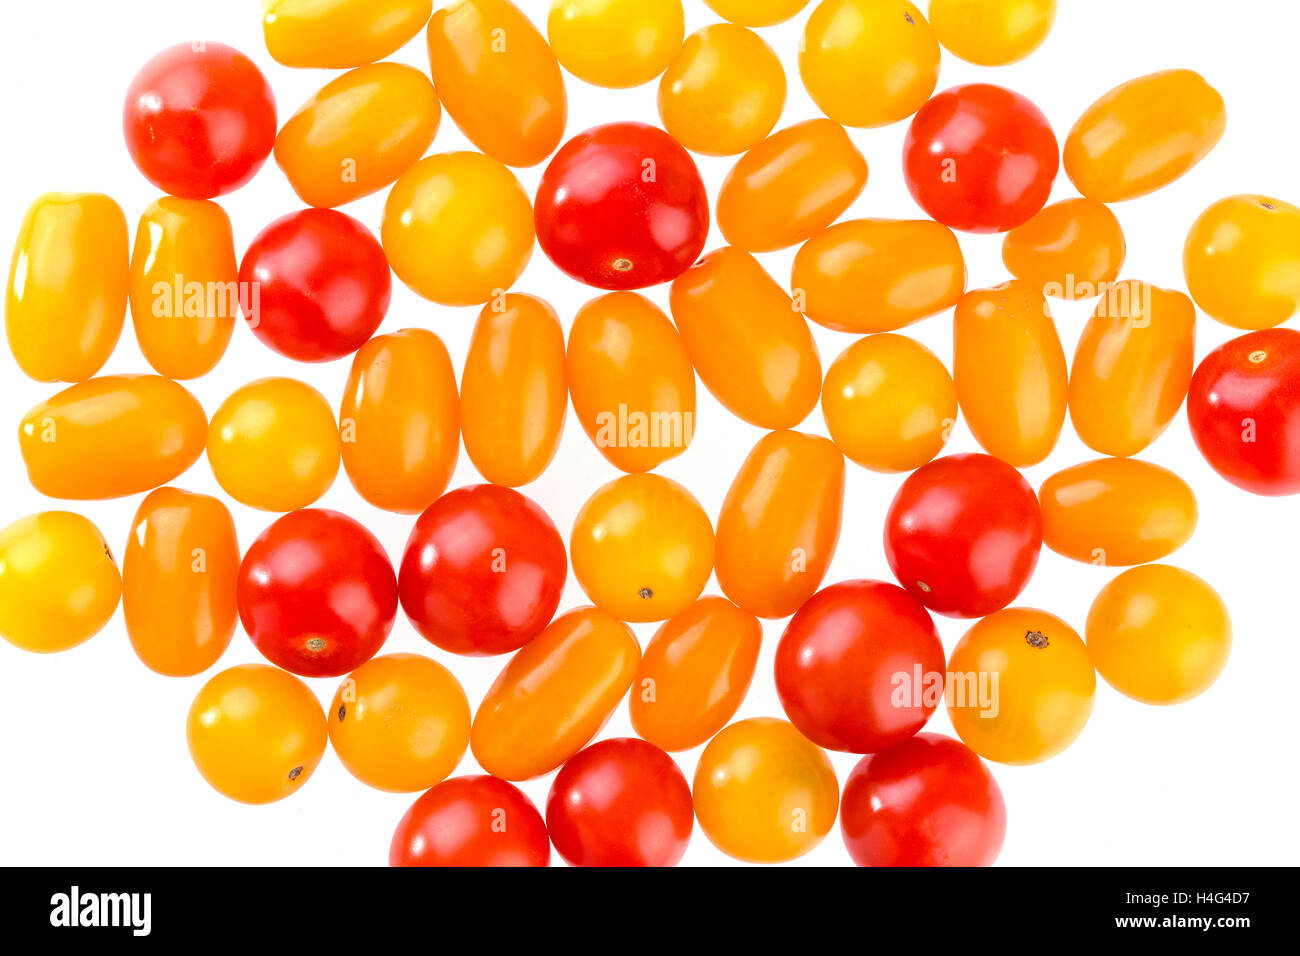 Cherry tomato isolated on white background Stock Photo